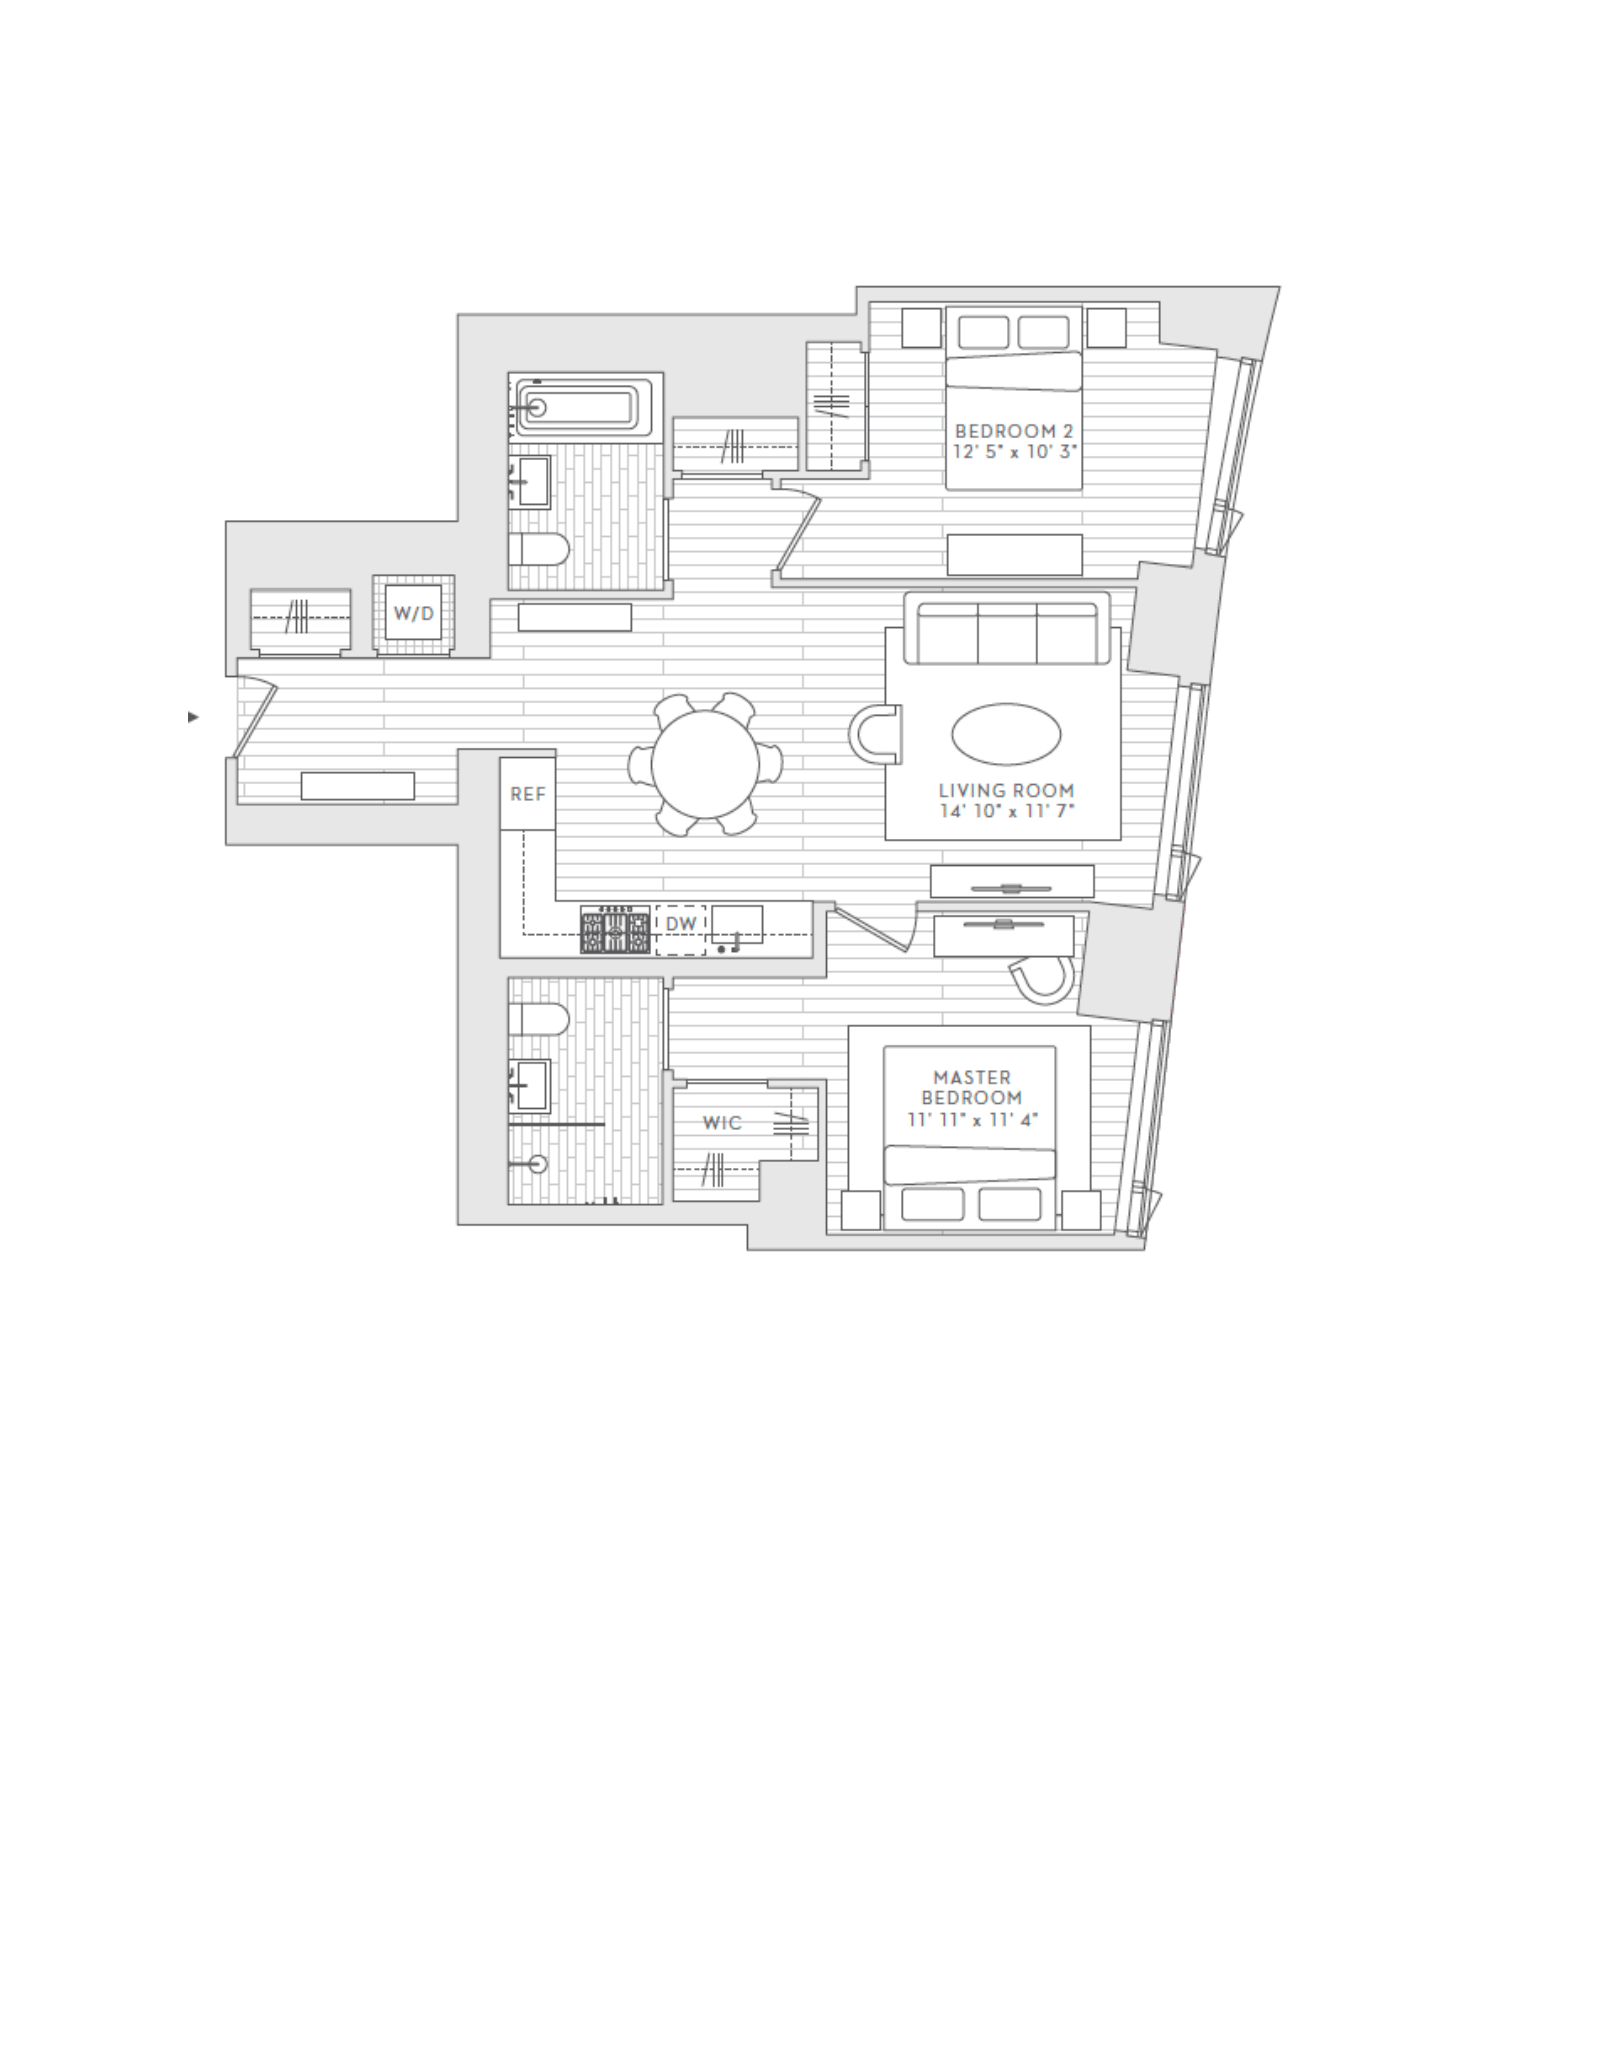 Floorplan for 11 Hoyt Street, 24G